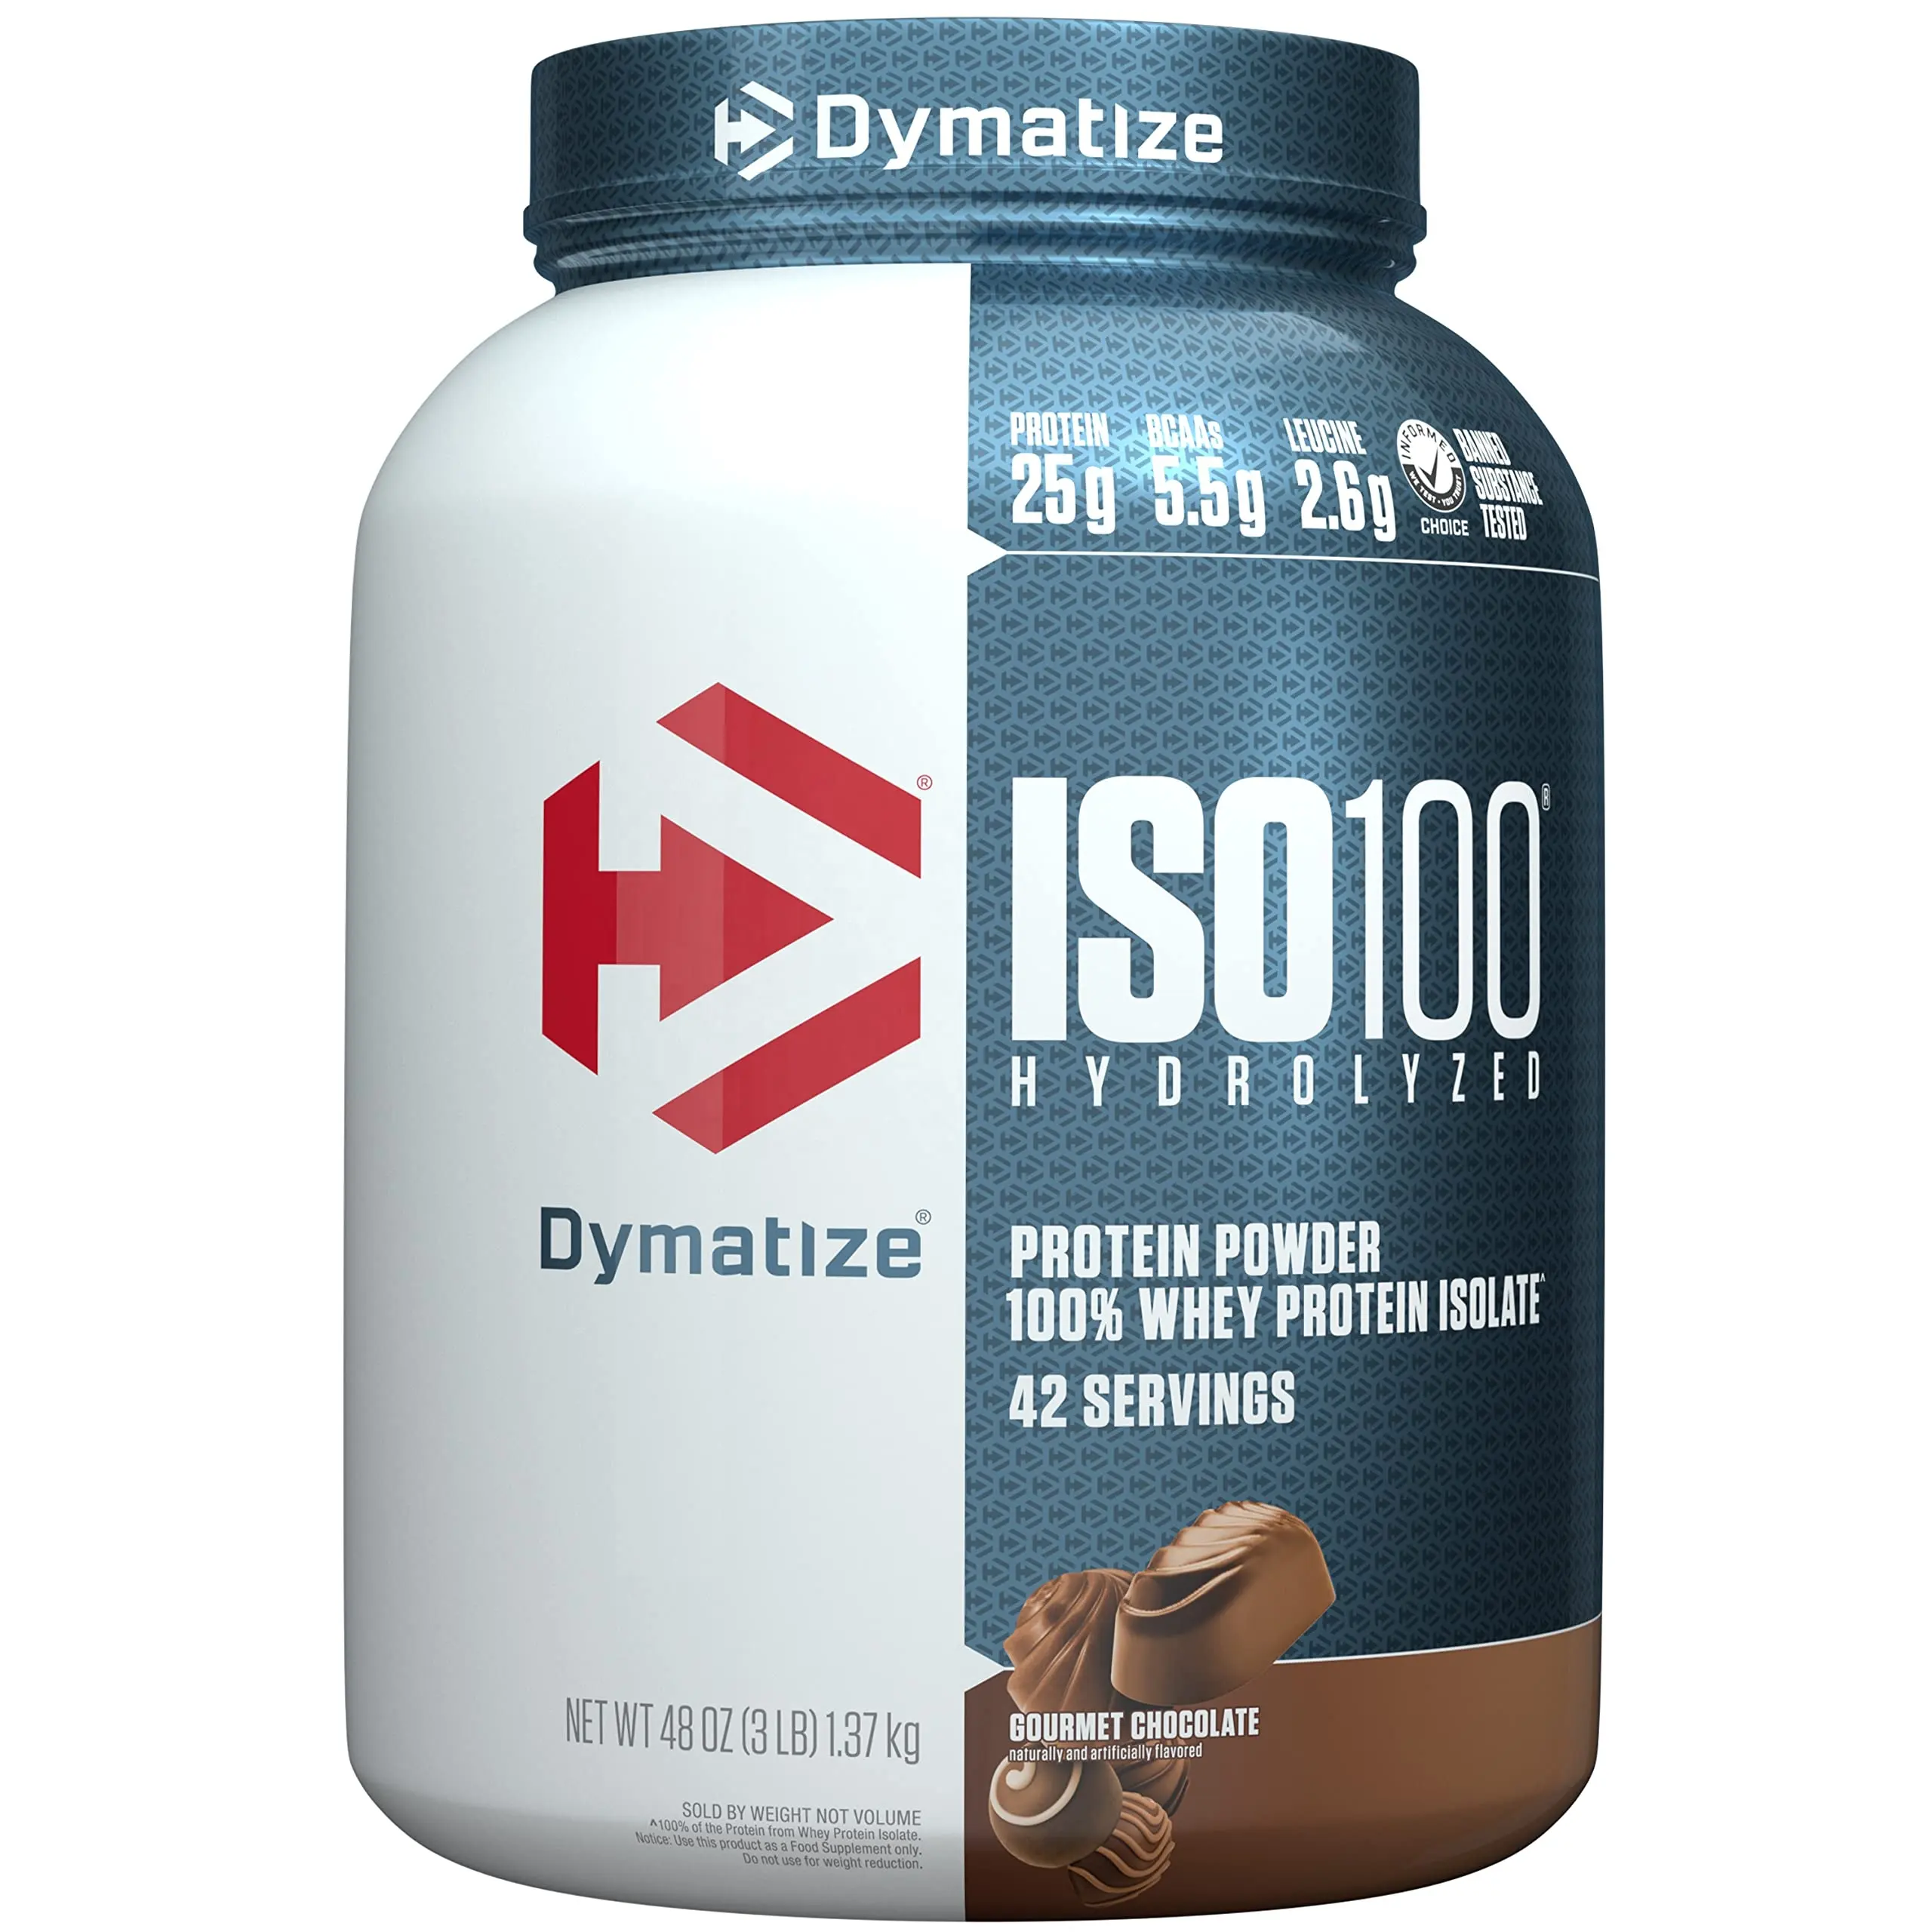 Wholesale Dymatize ISO100 Hydrolyzed Protein Powder, 100% Whey Isolate Protein